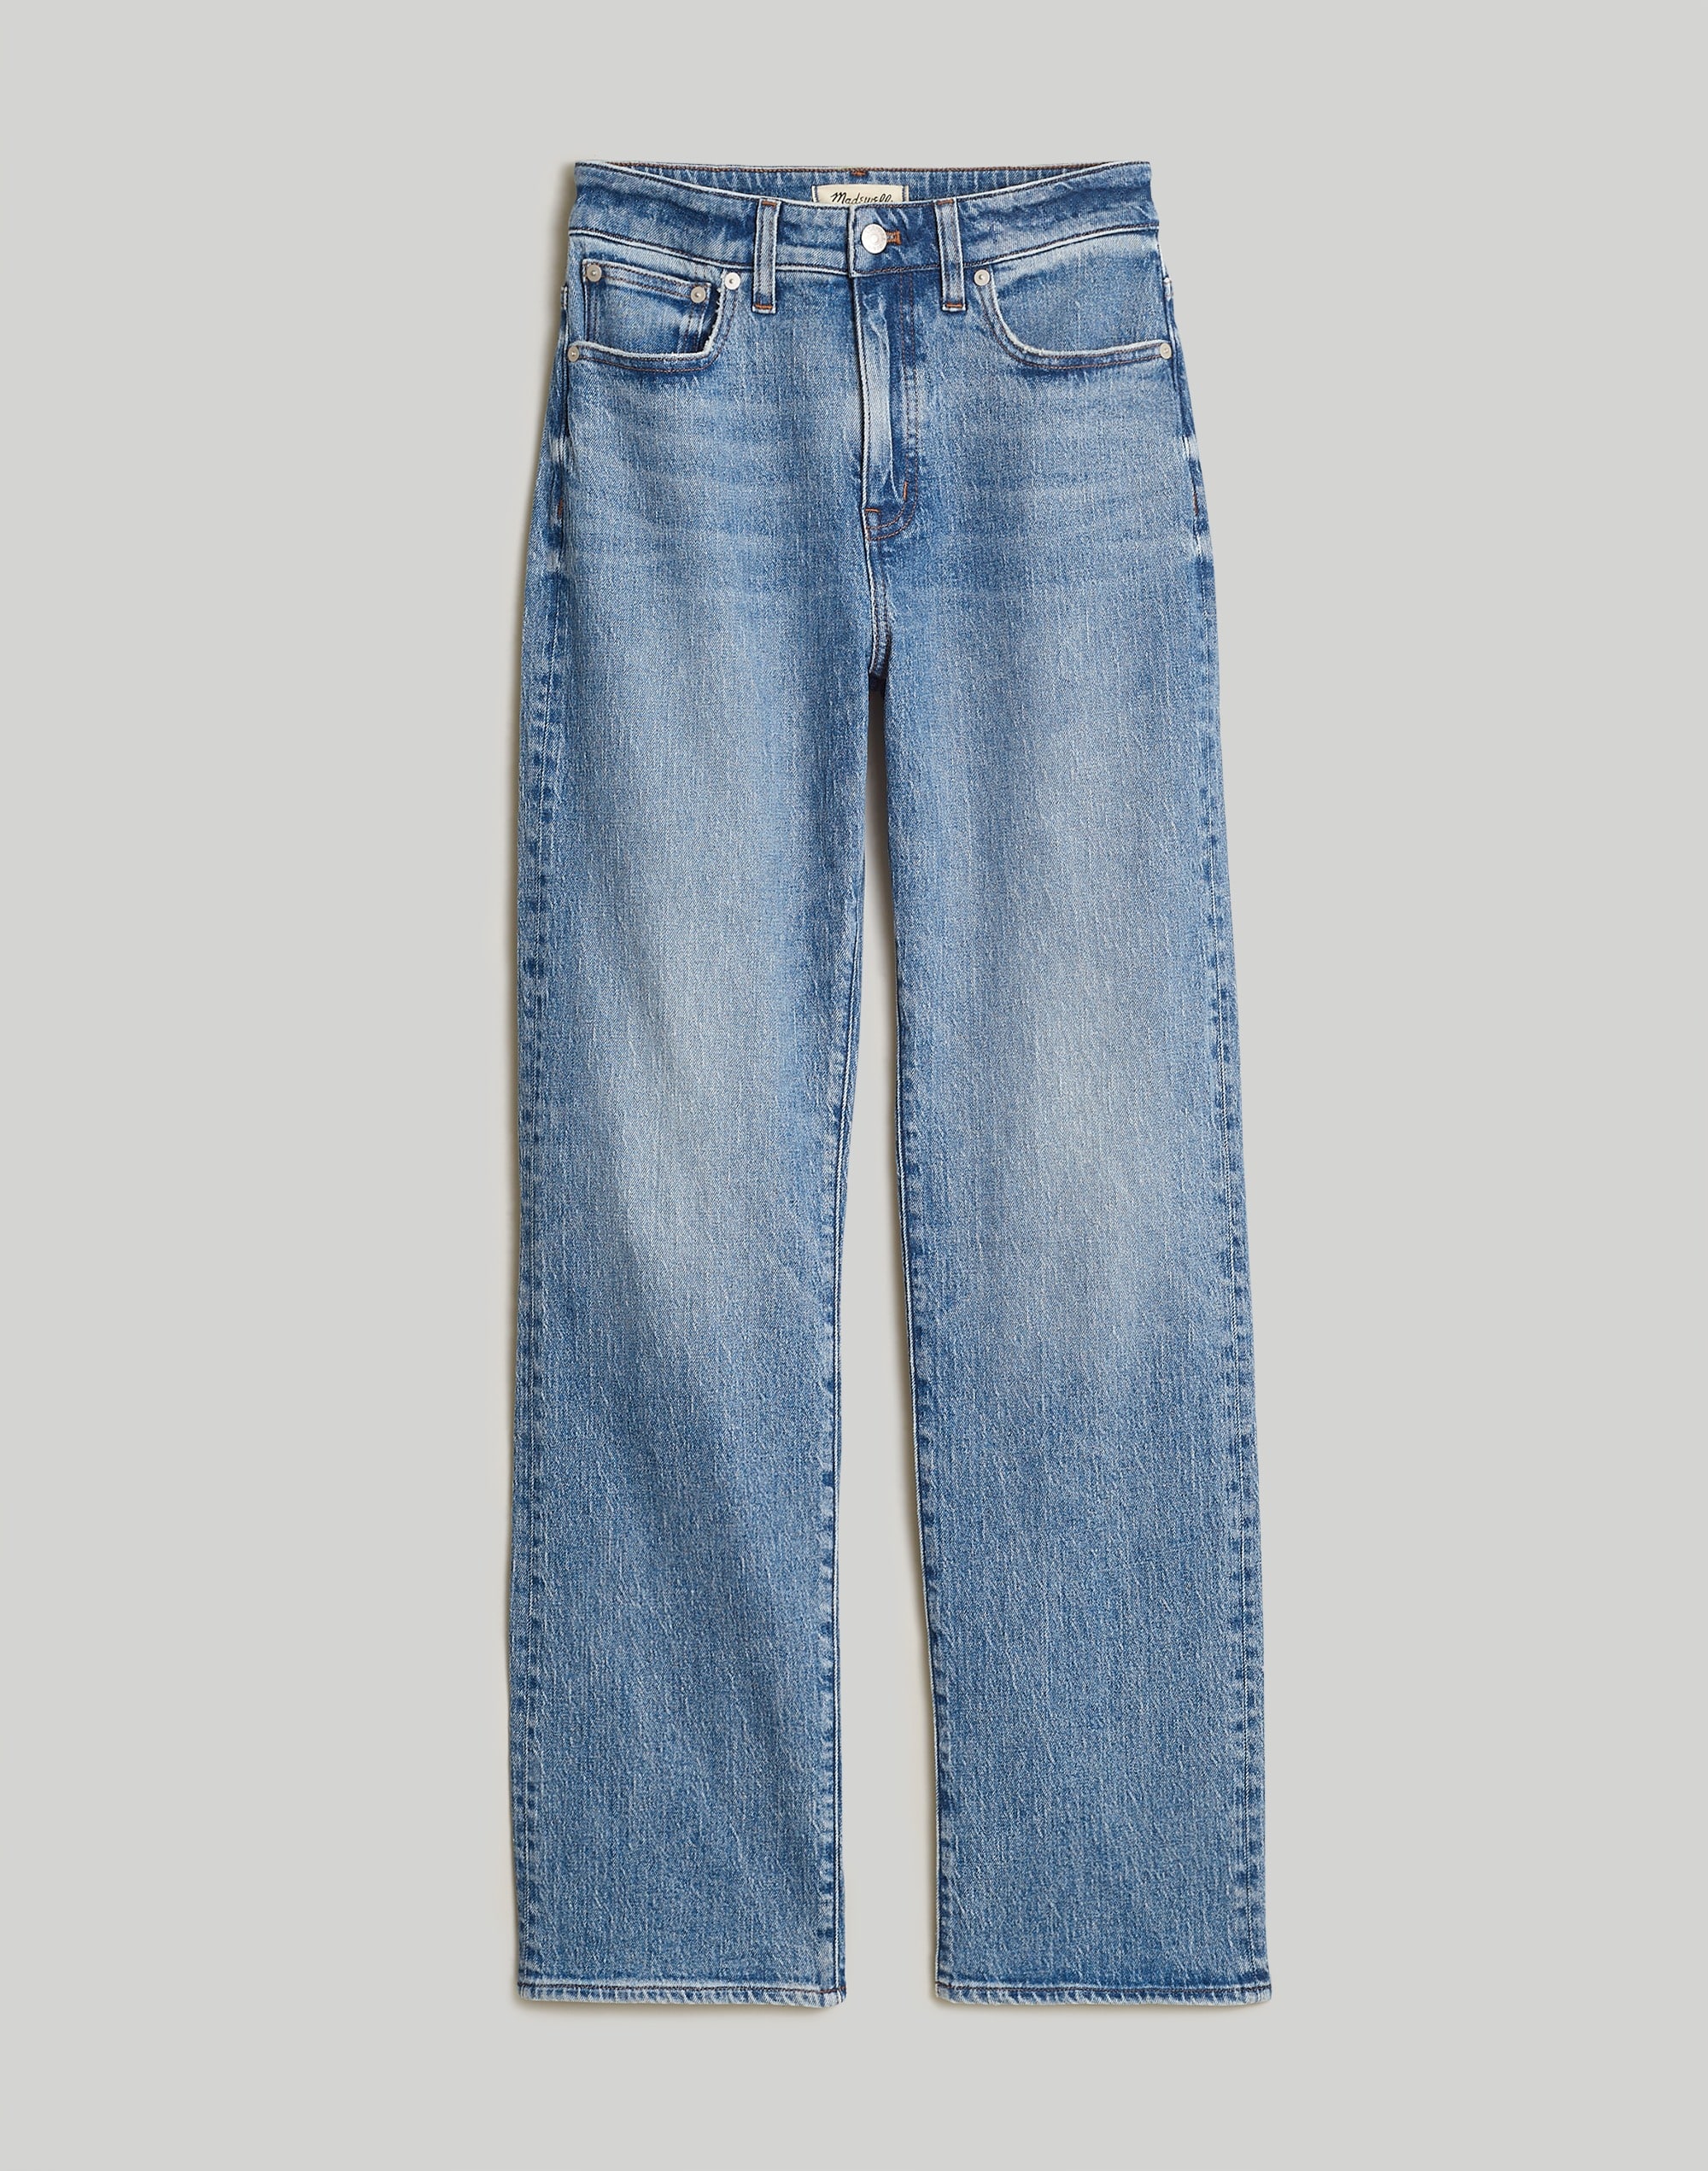 The Curvy '90s Straight Jean